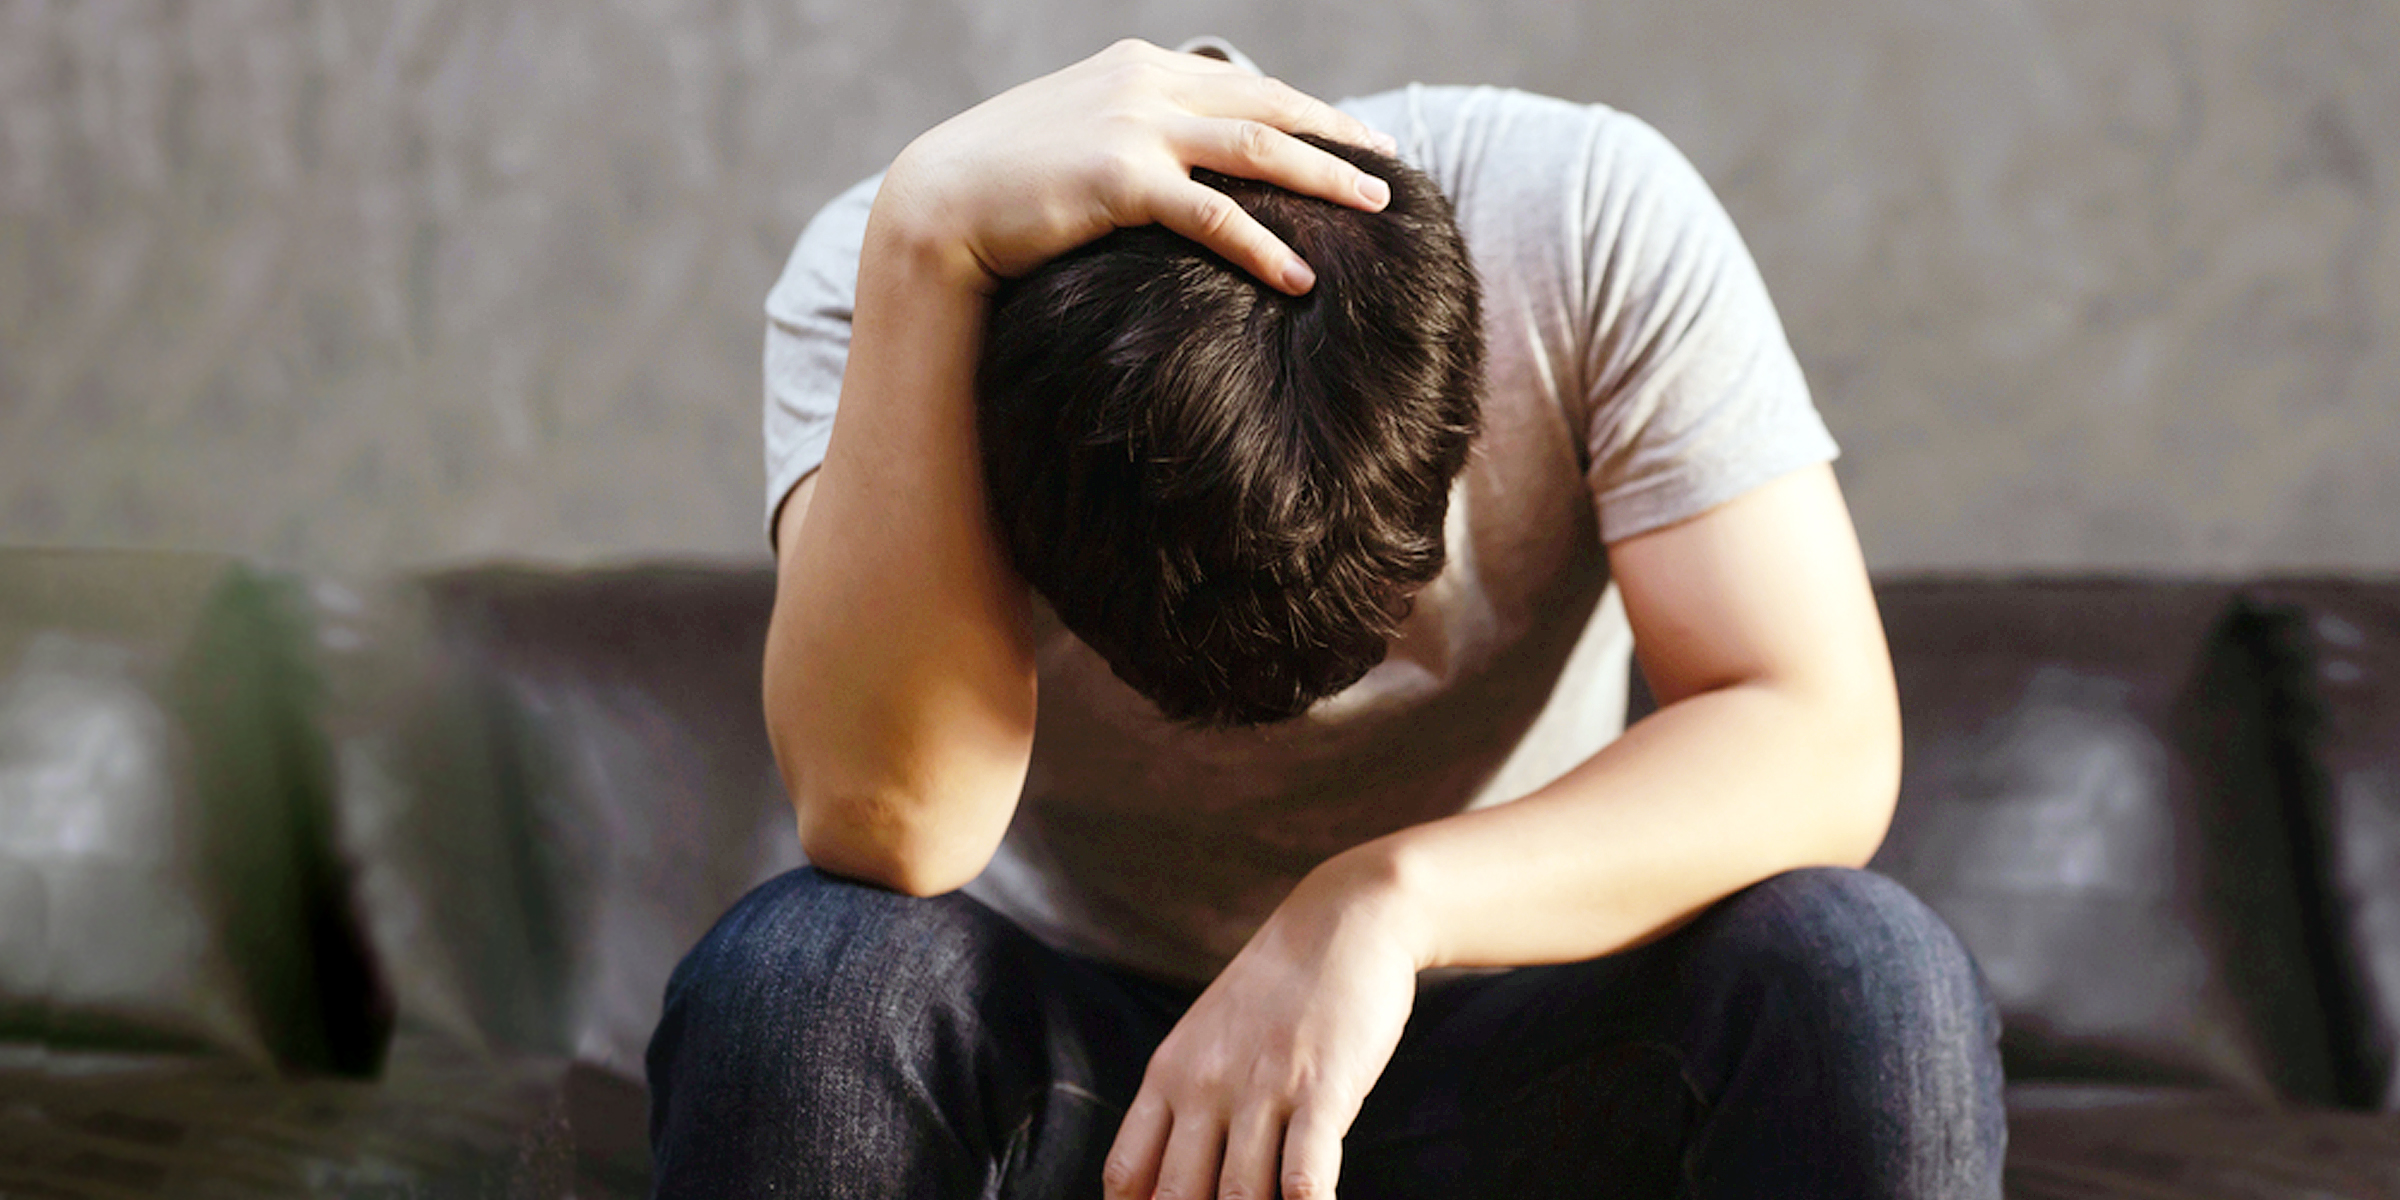 A distressed man | Source: Shutterstock